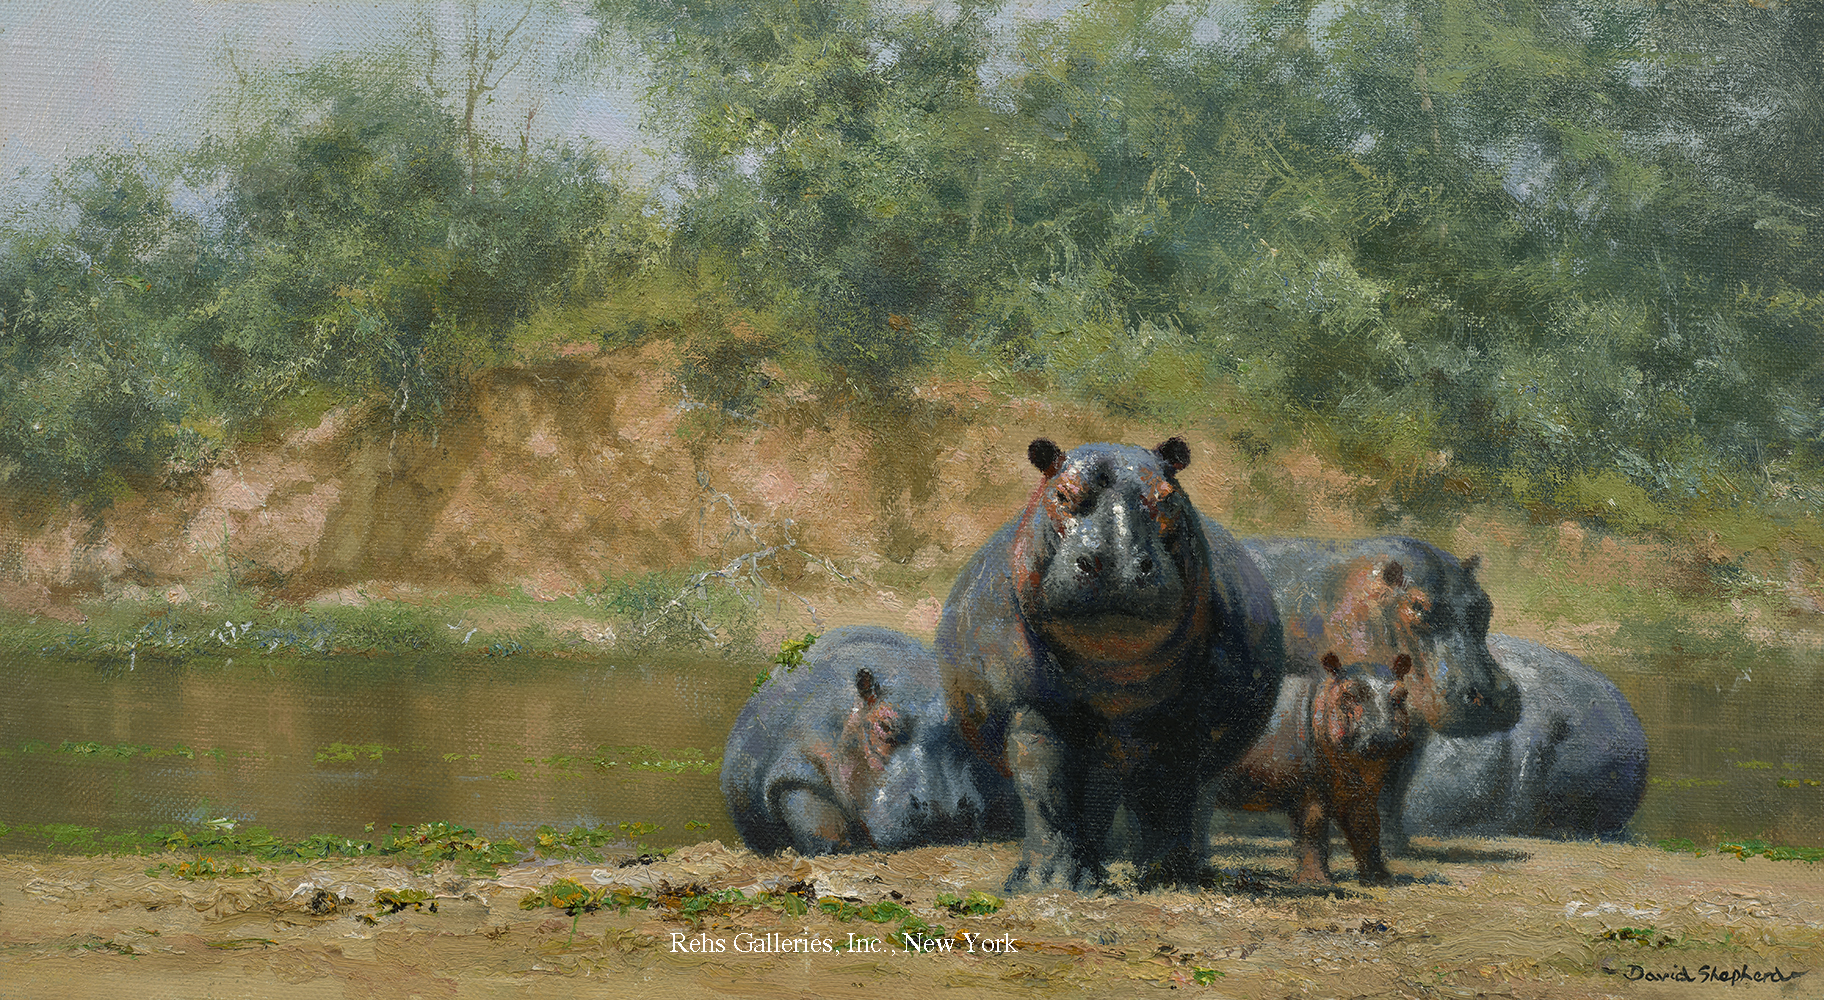 Hot Hippos - Shepherd, David